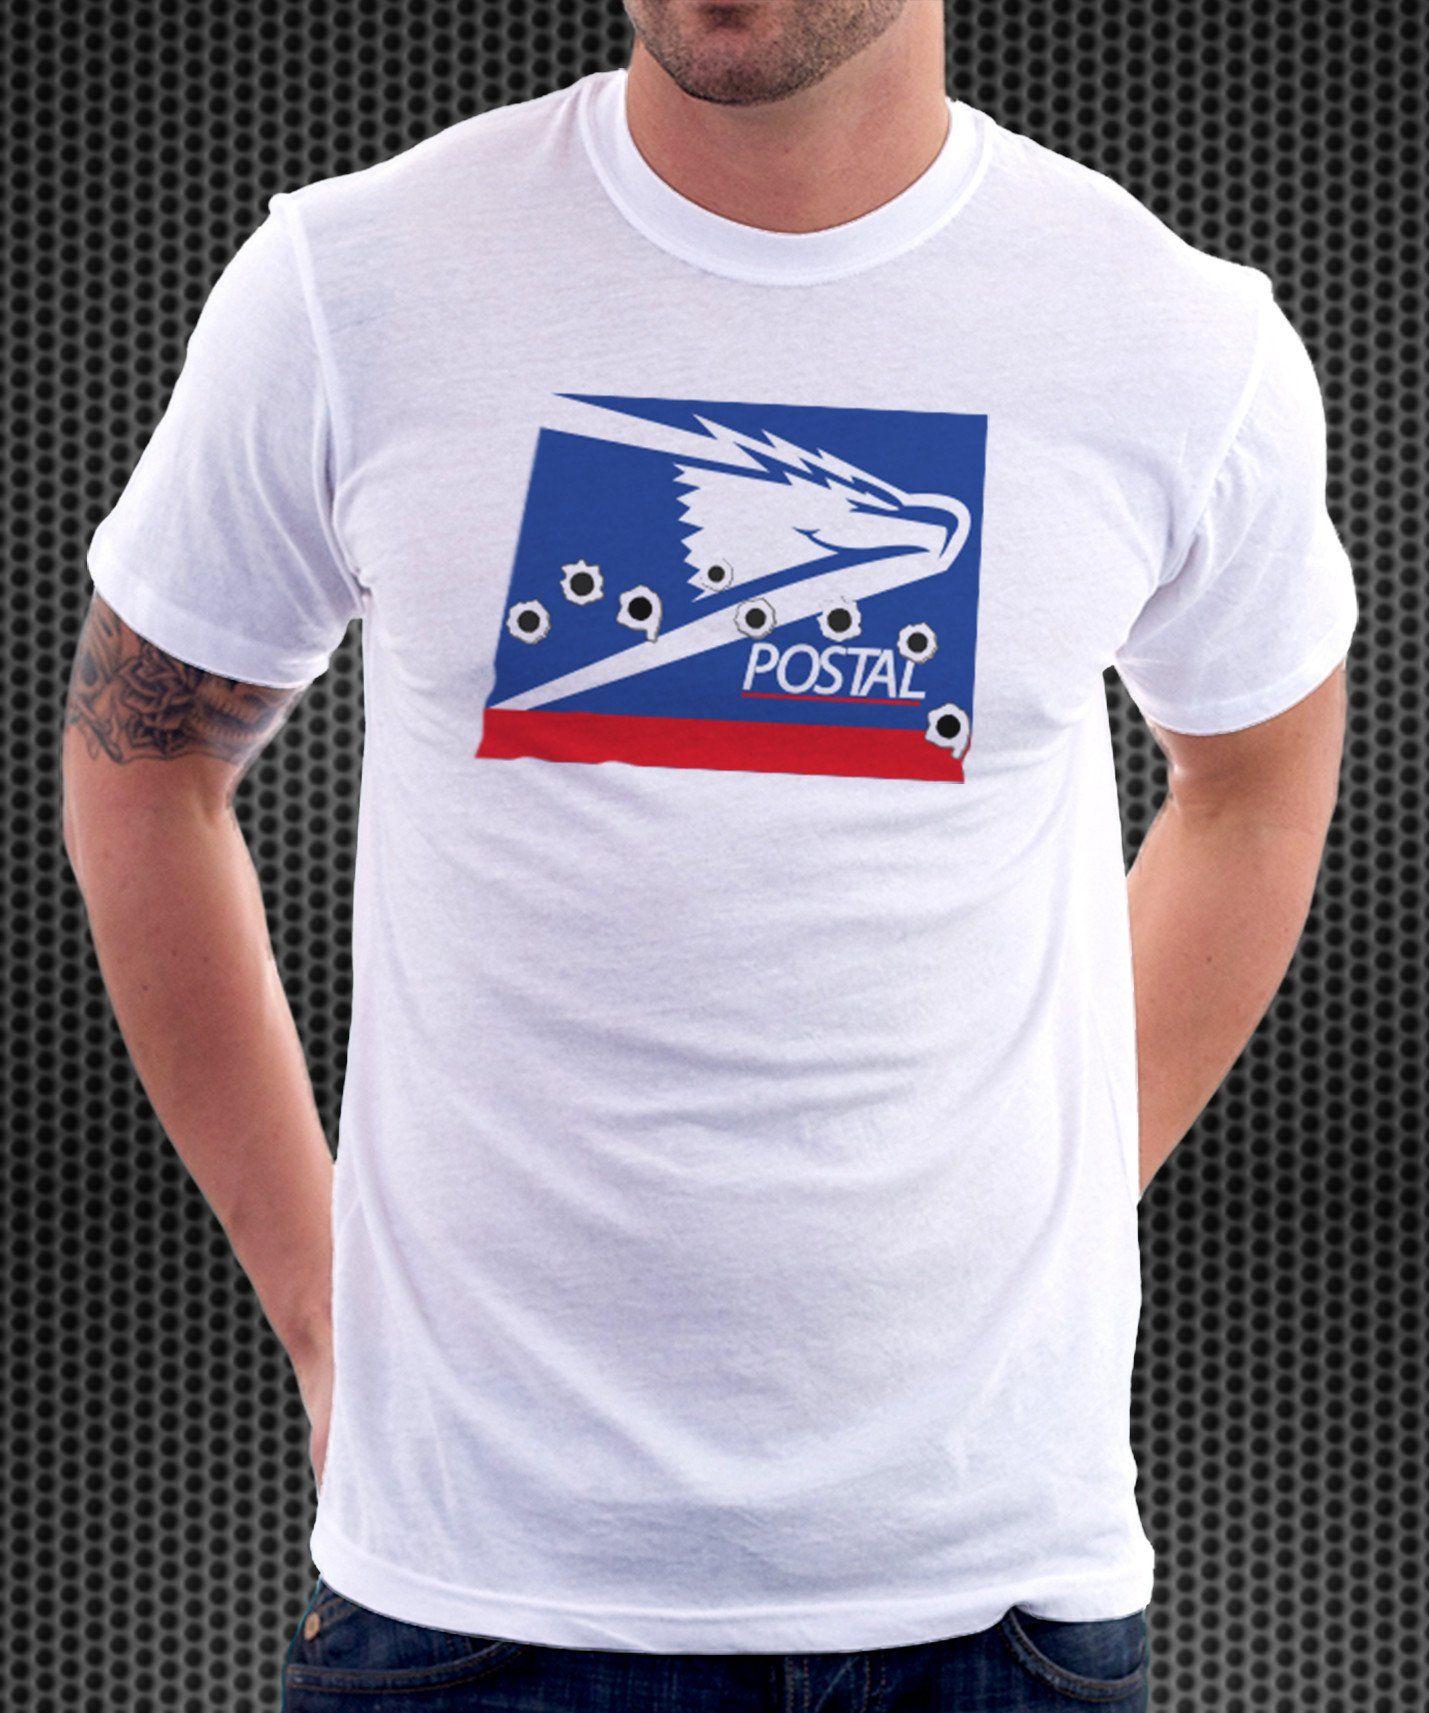 Us Postal Service Logo - USPS US Postal Service Logo Parody Spoof Tshirt: Postal Logo White